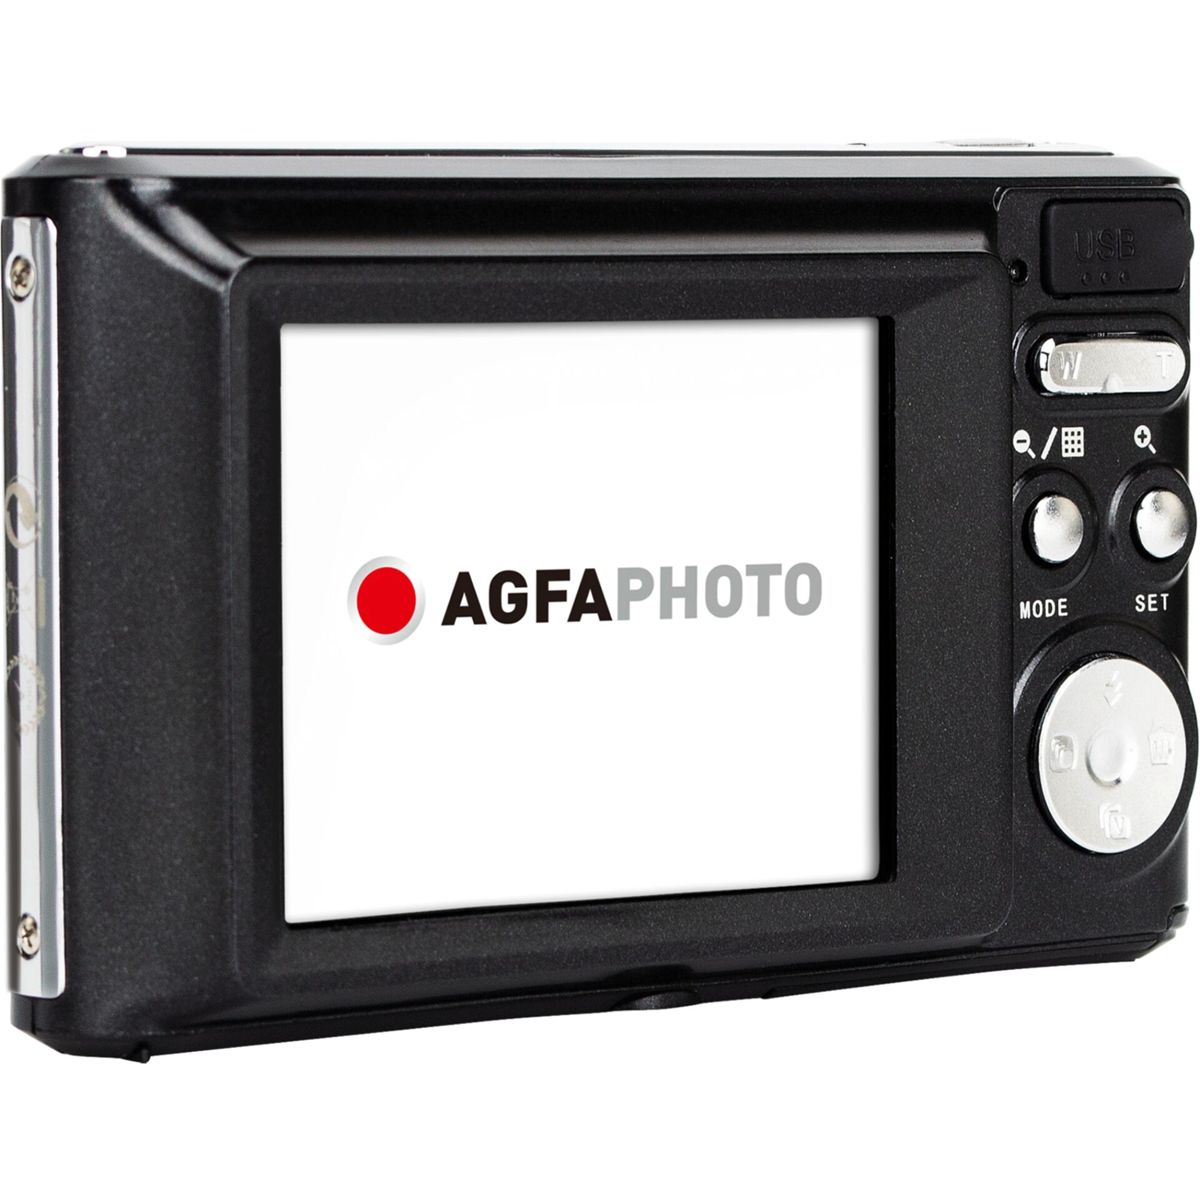 AGFAPHOTO Compact opt. DC5200 8 TFT schwarz, Display- Digitalkamera x Cam Zoom, LCL